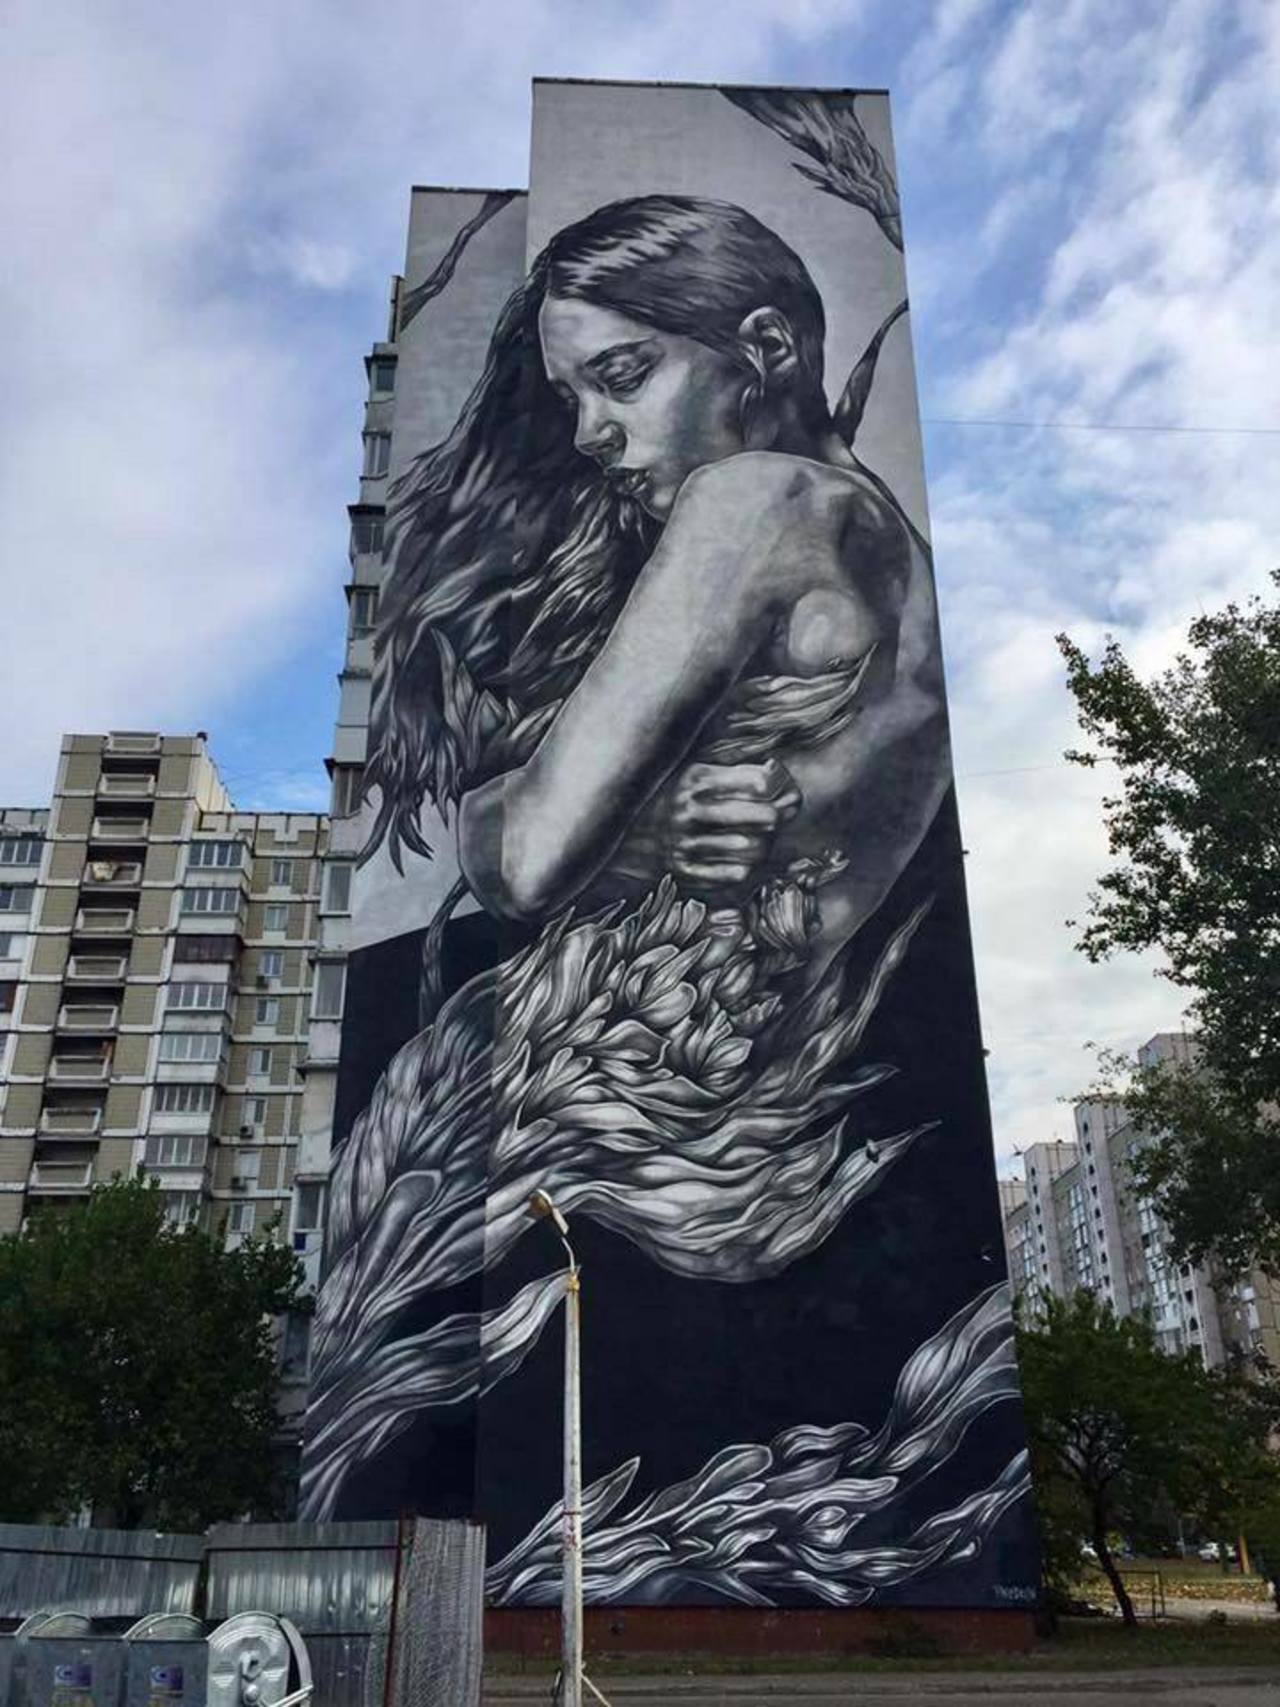 ... like beautiful lady... in black and white. Amazing work by Dima Fatum in Kiev, Ukraine #StreetArt #rt #lady #BlackAndWhite #Details #Graffiti #UrbanArt #Kiev https://t.co/XW7HzEzG67